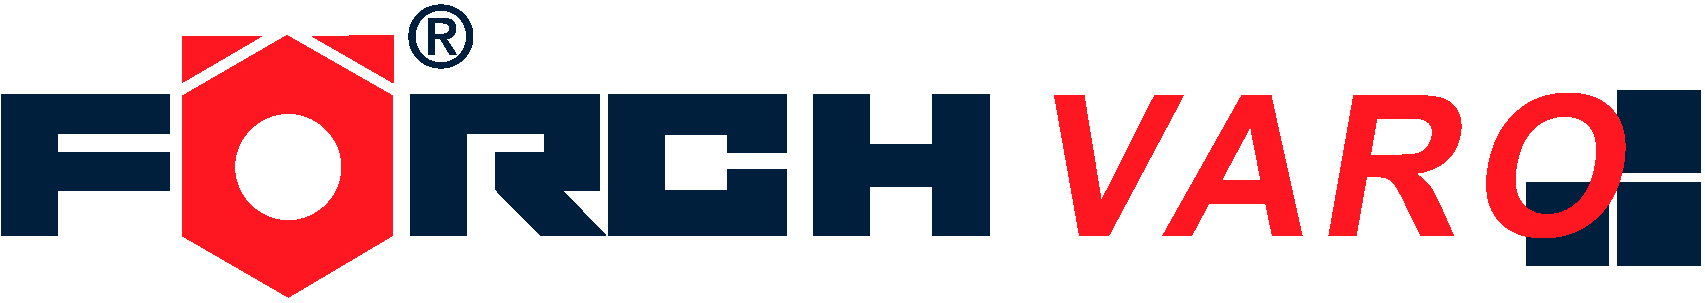 Forch VARO logo